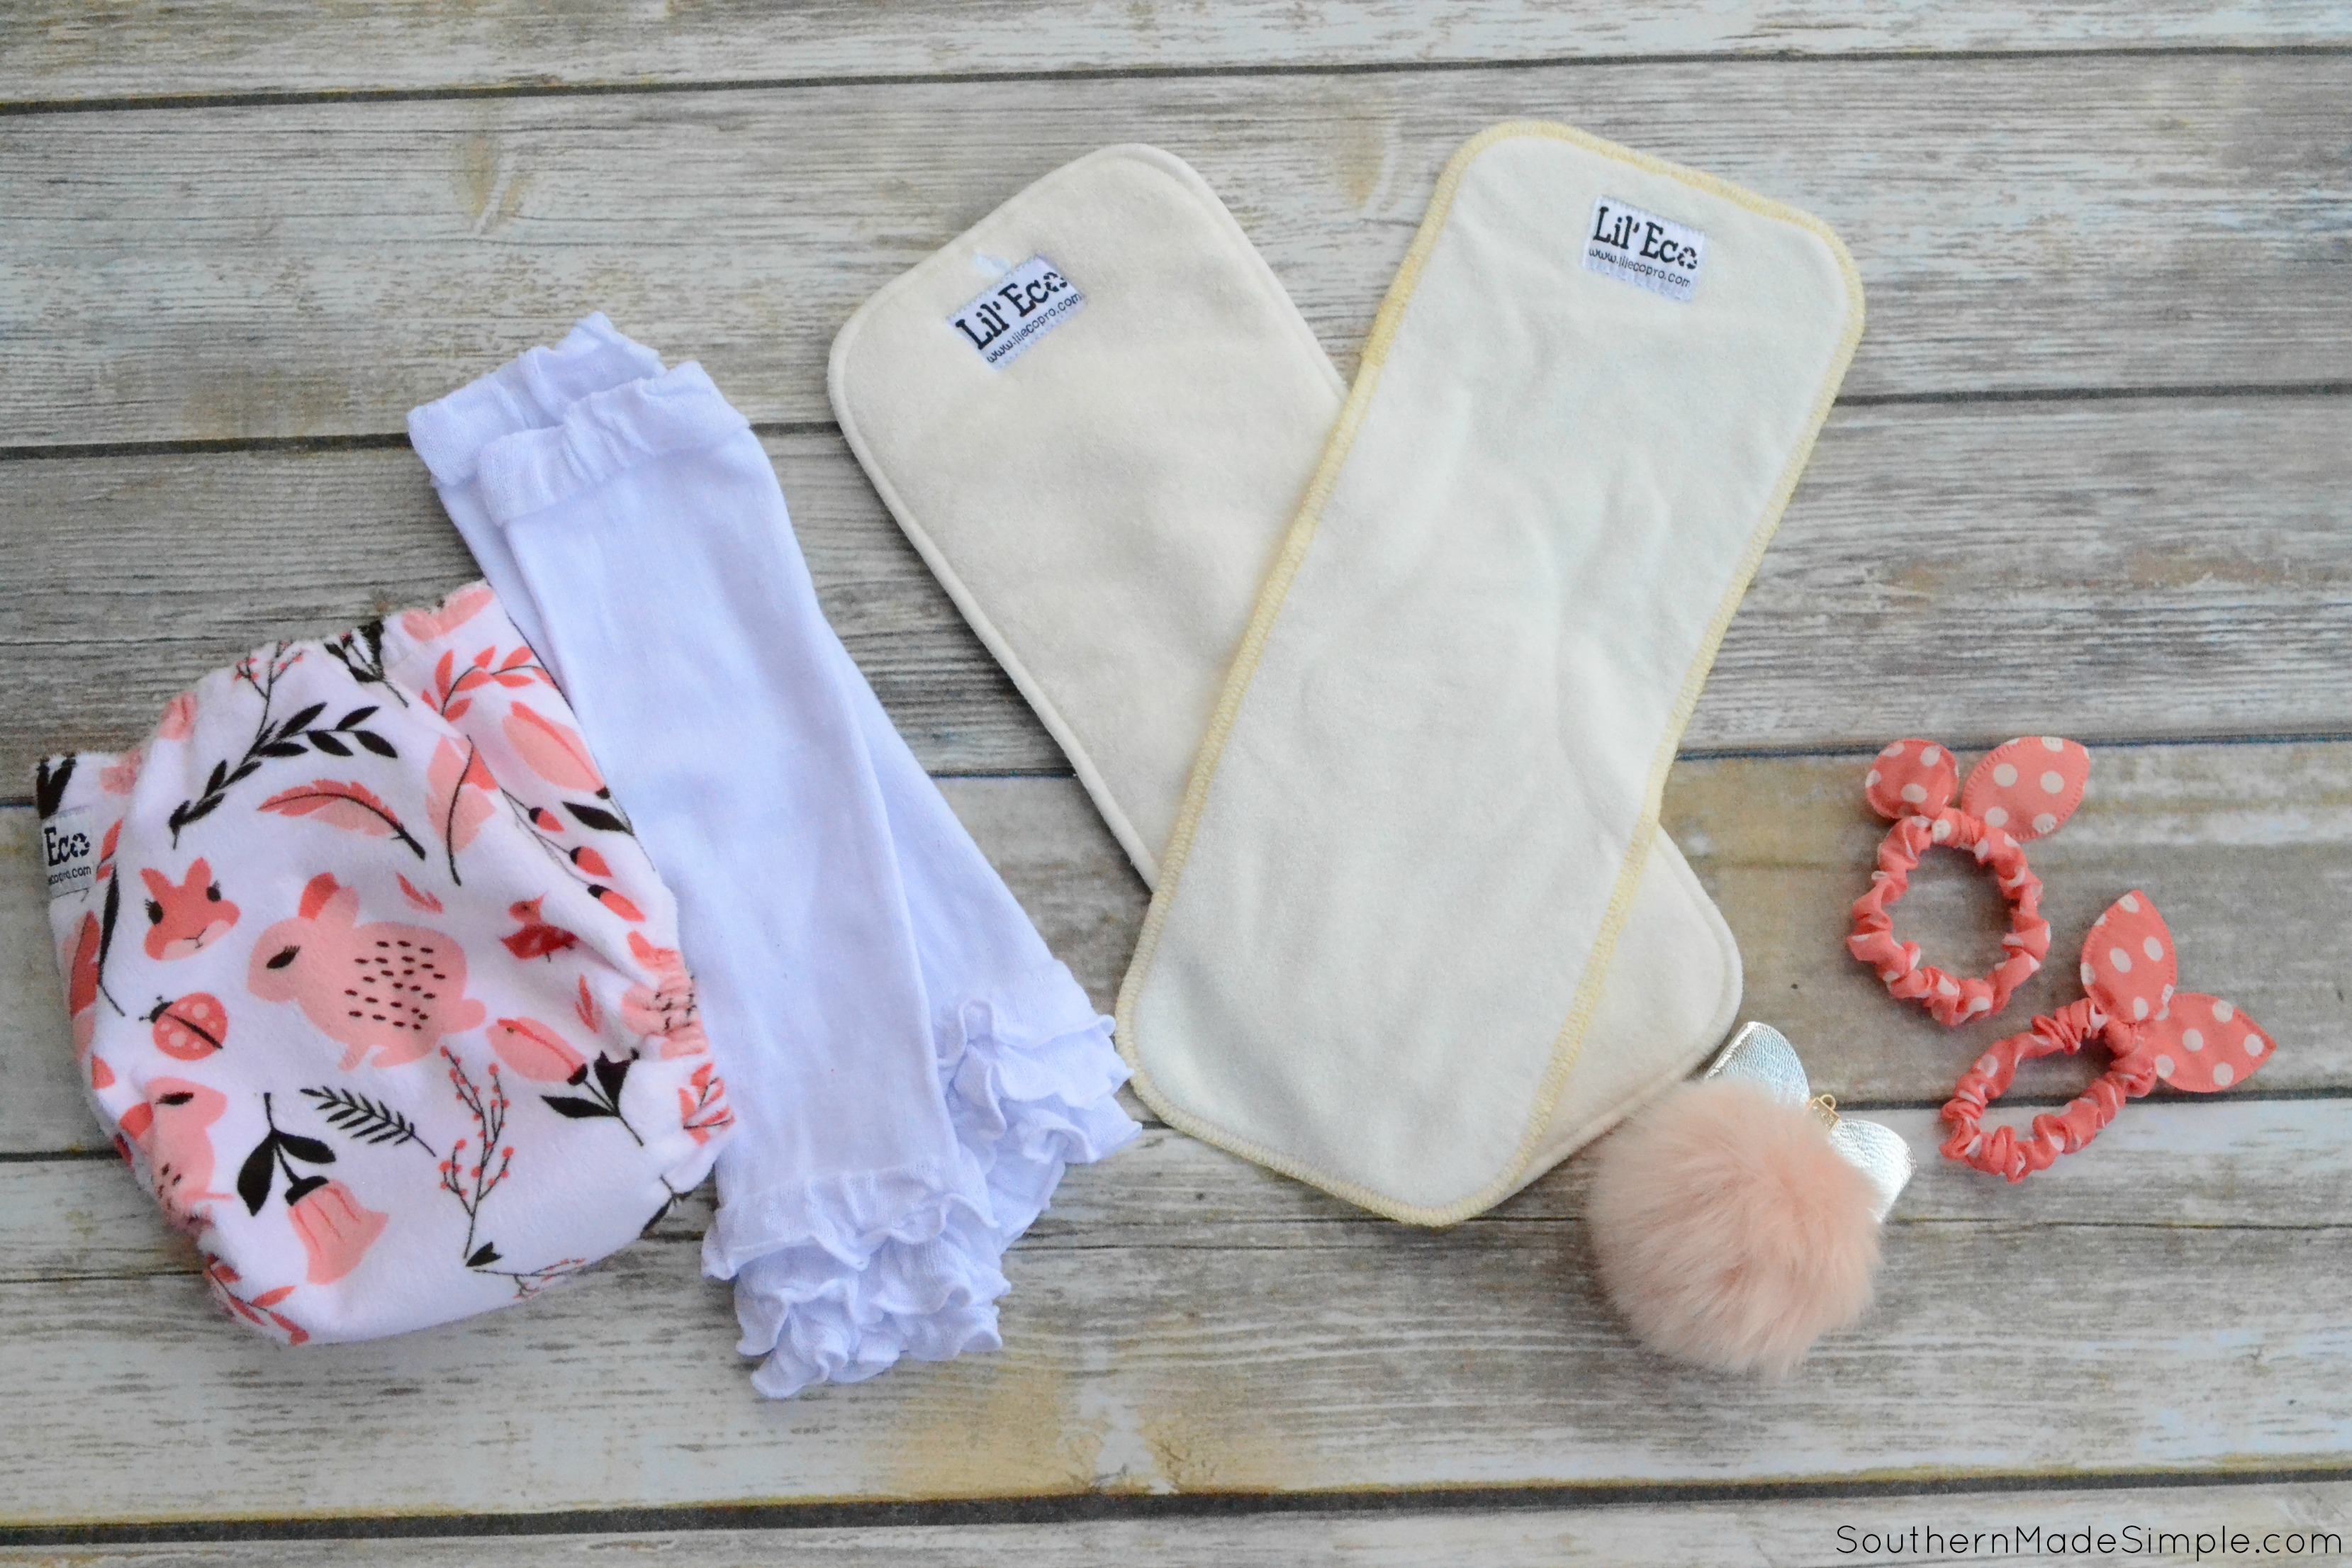 Lil Eco Cloth Diaper Review